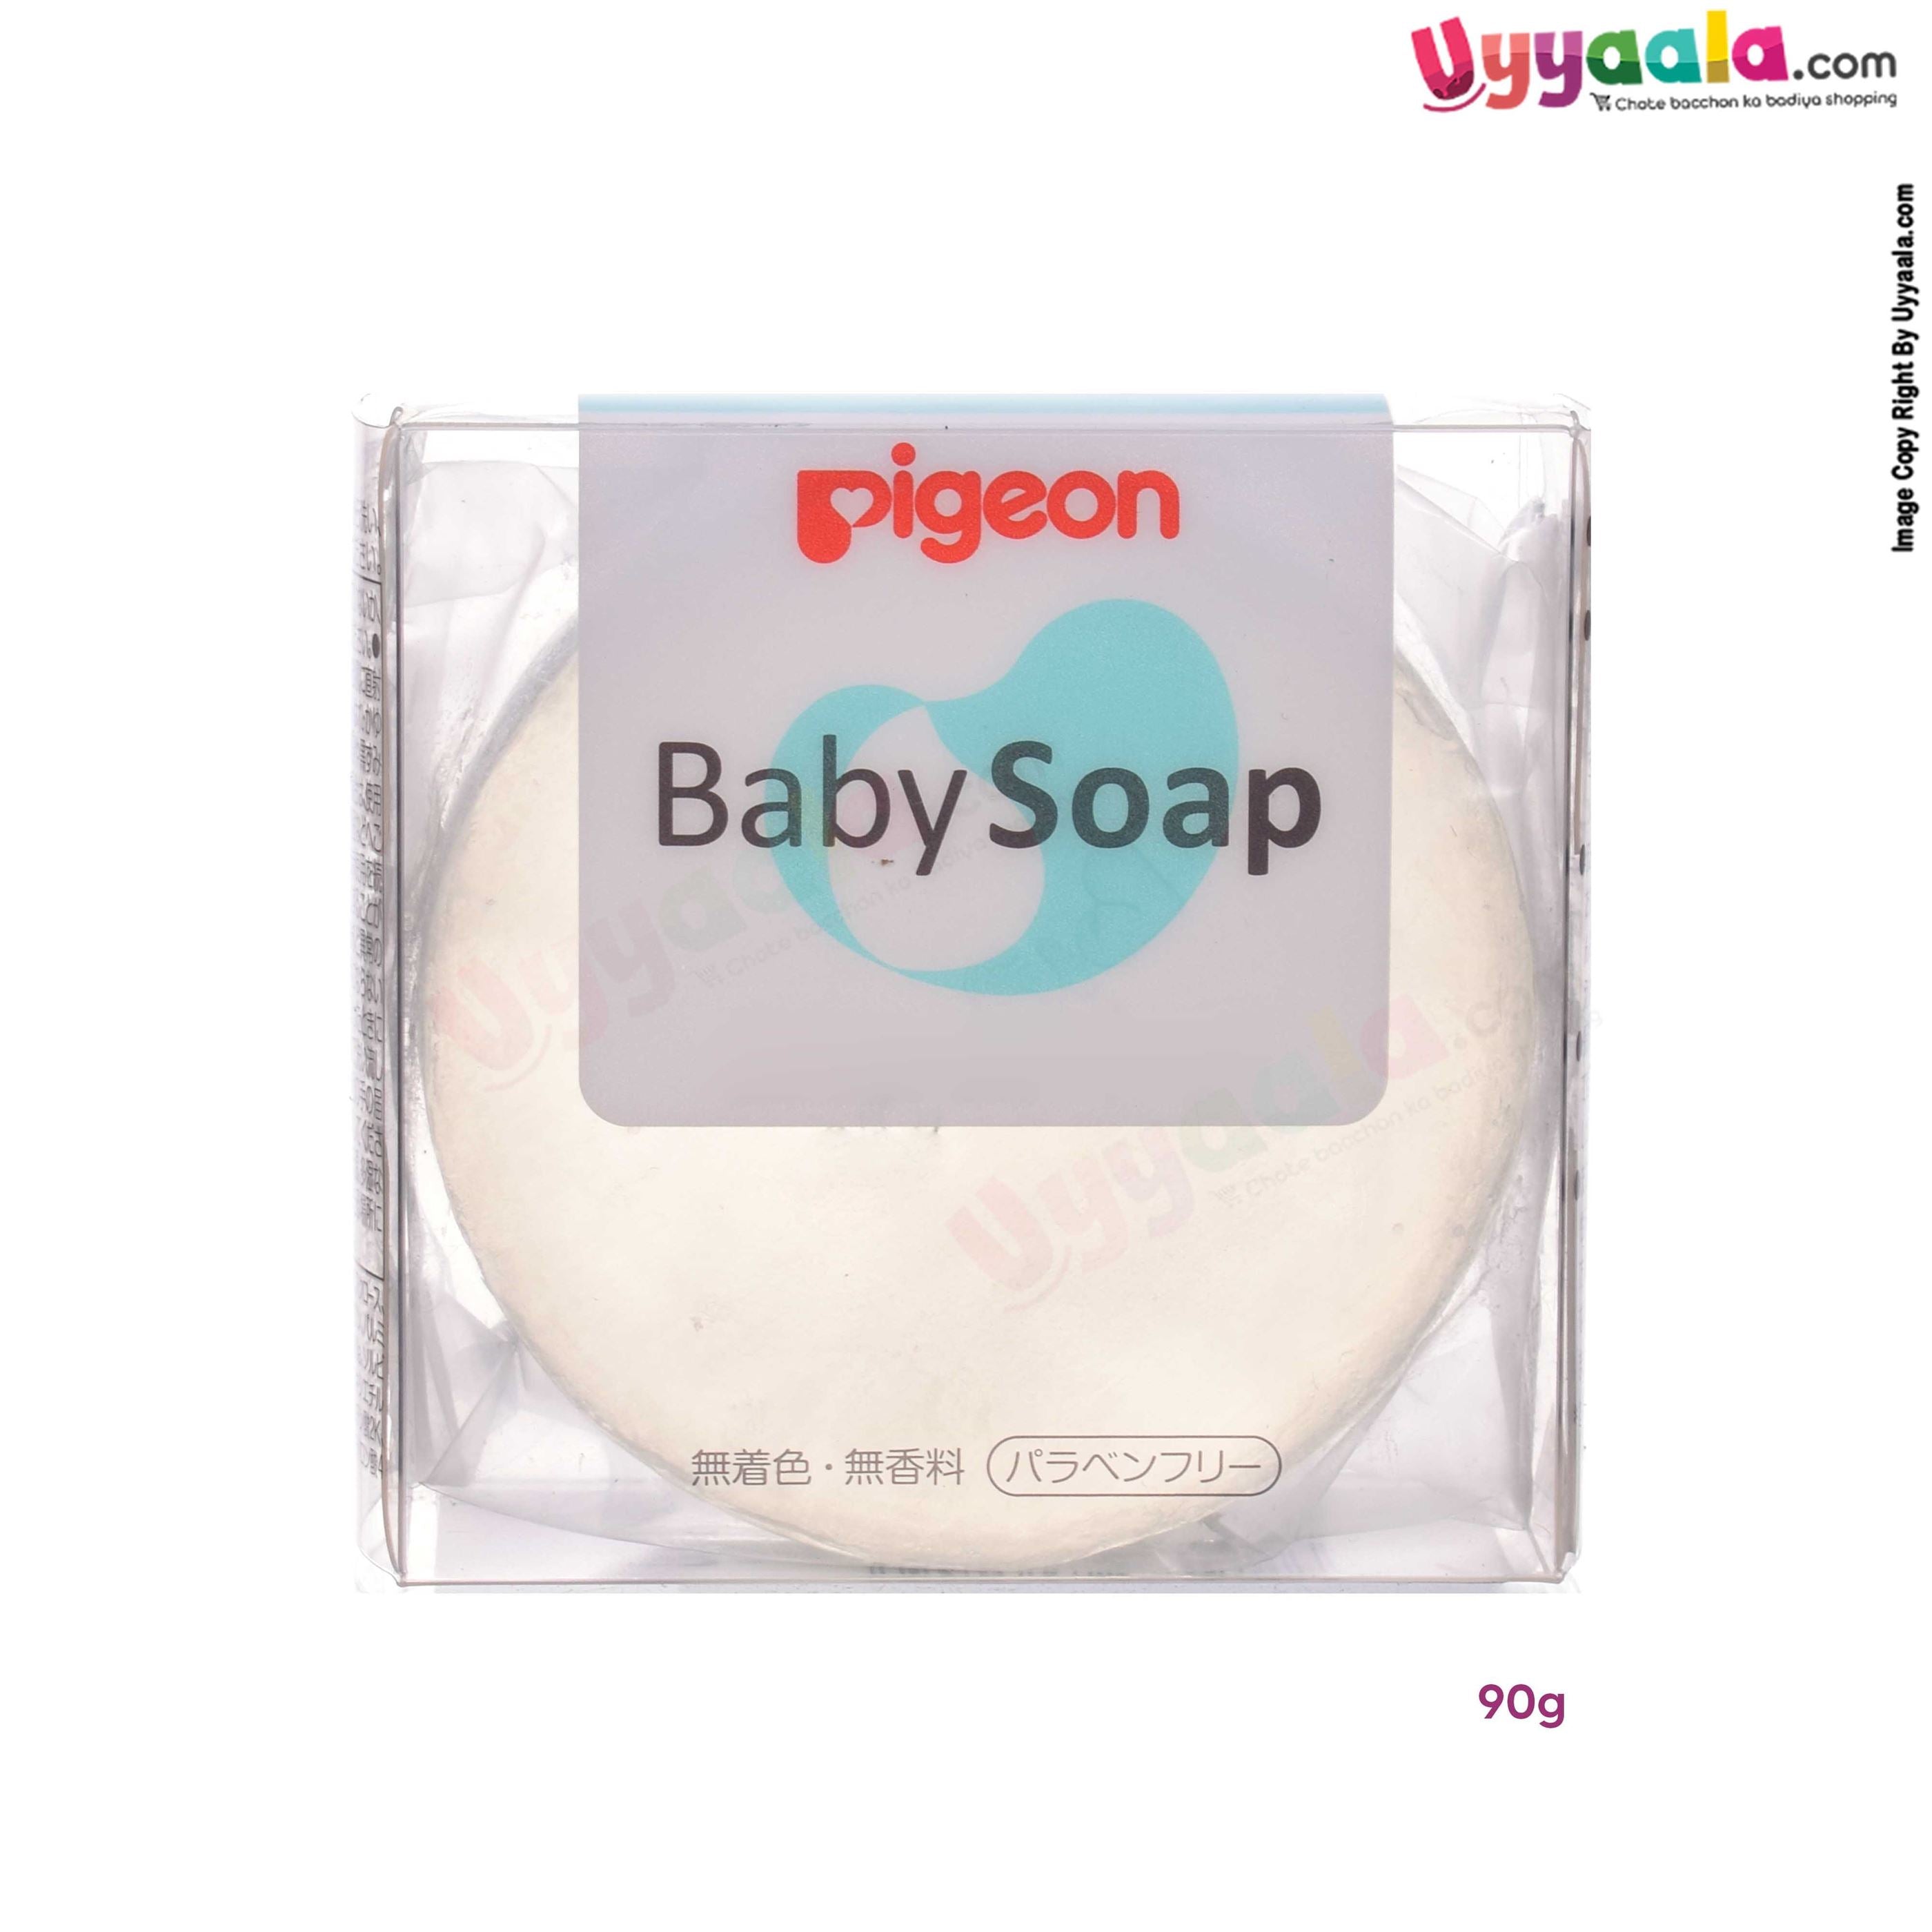 PIGEON transparent Soap for babies